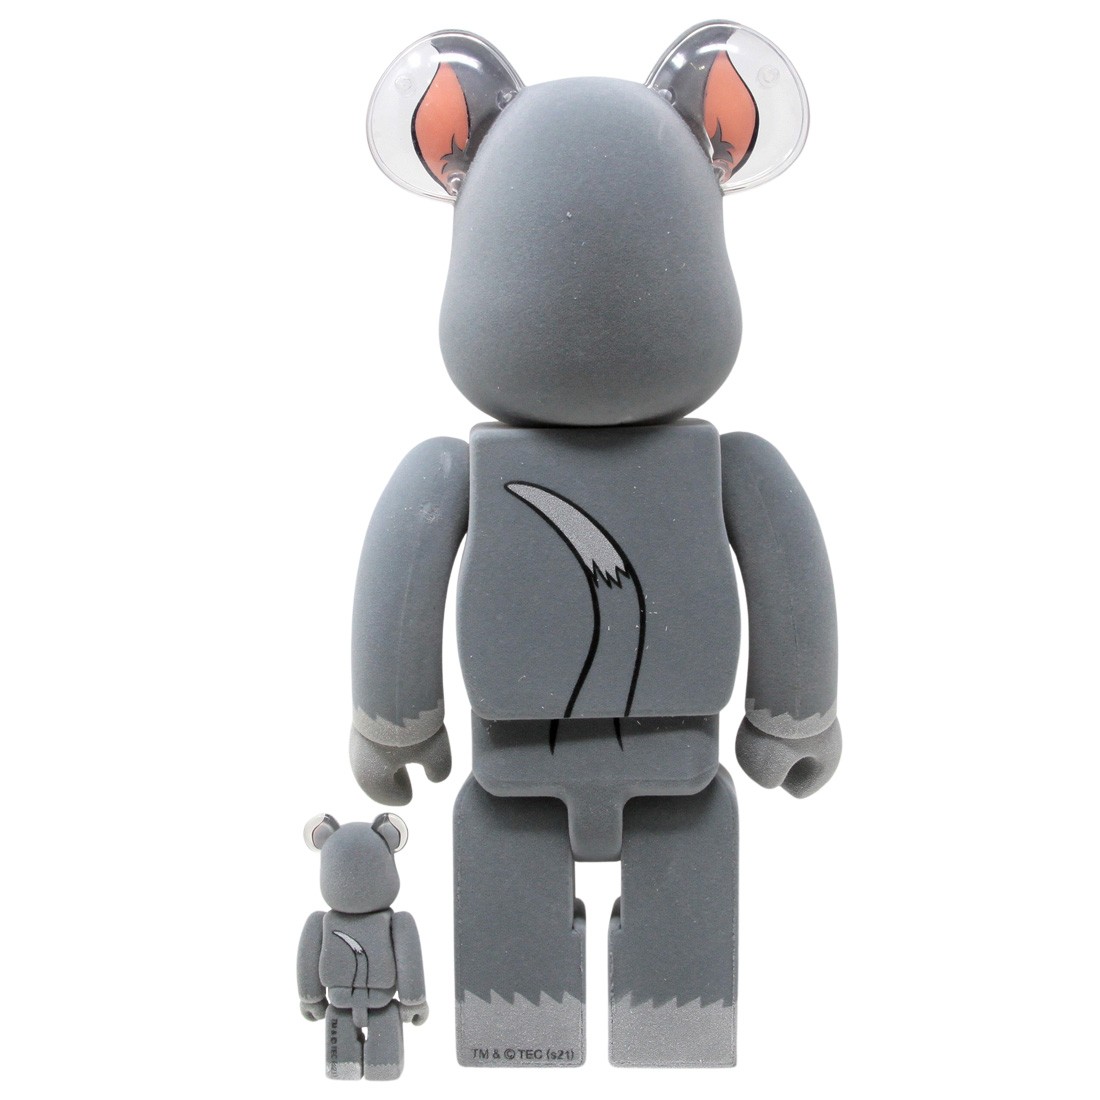 Medicom Tom and Jerry - Tom Flocky 100% 400% Bearbrick Figure Set (gray)